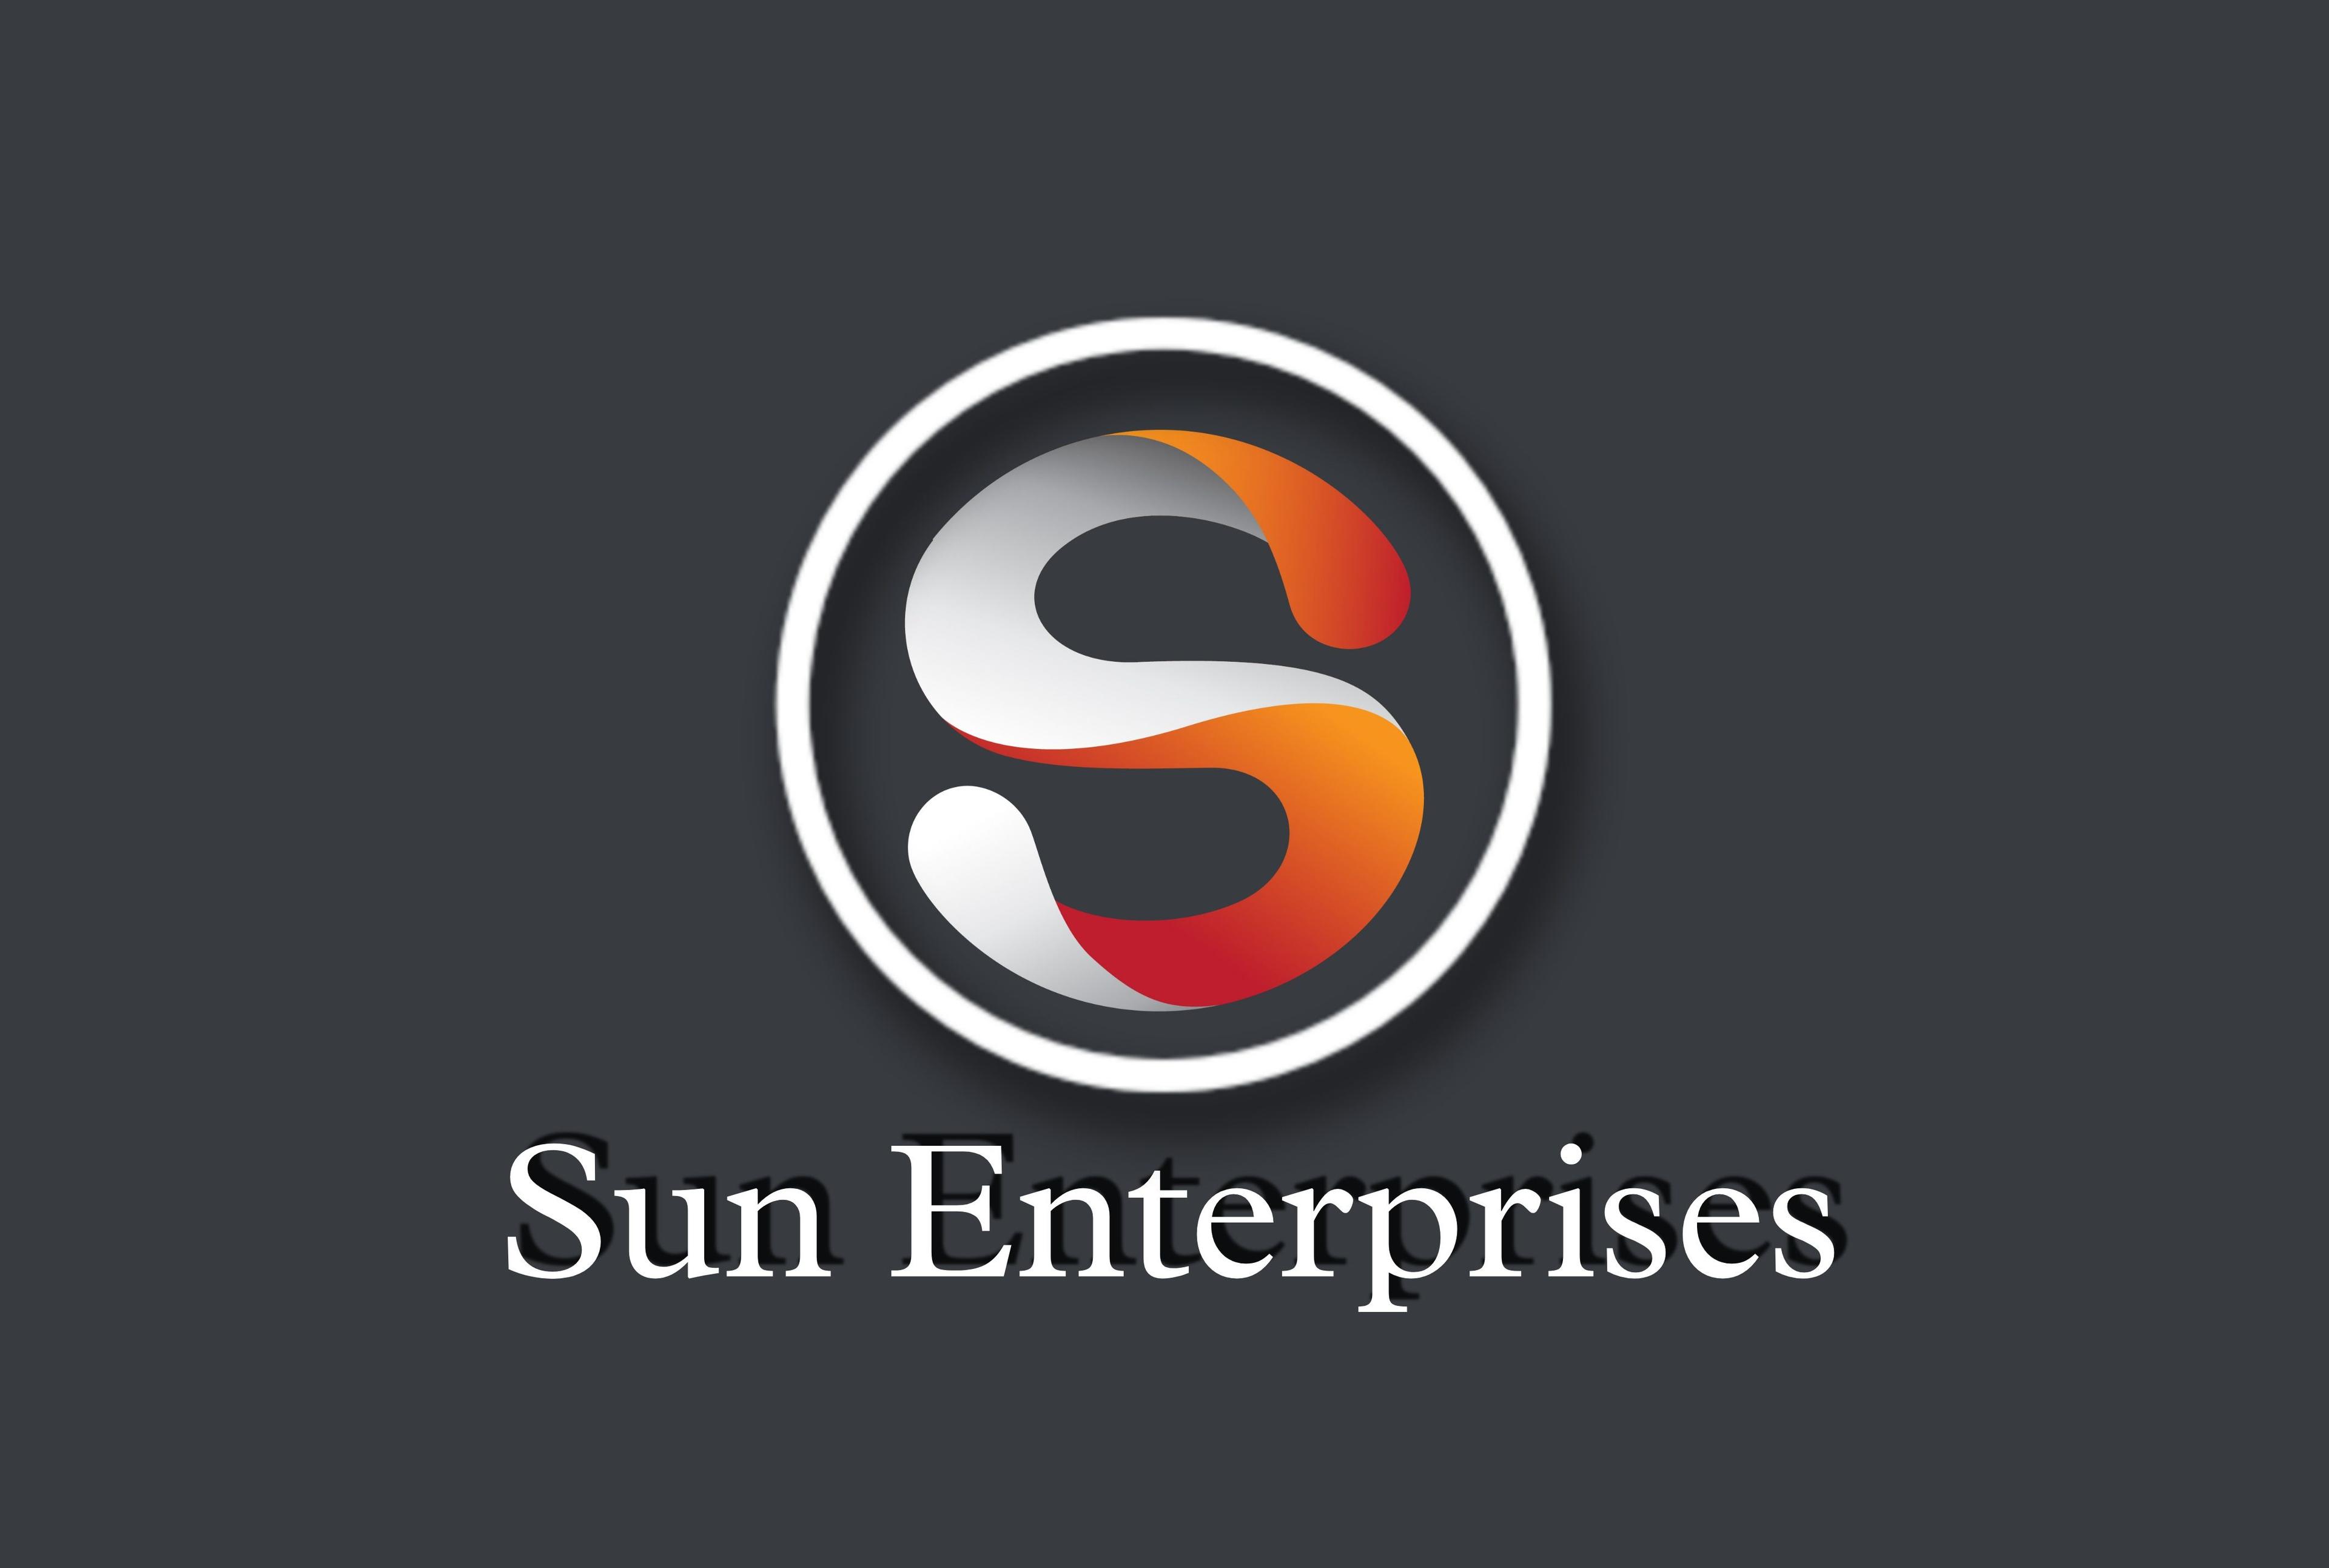 Sun Enterprises